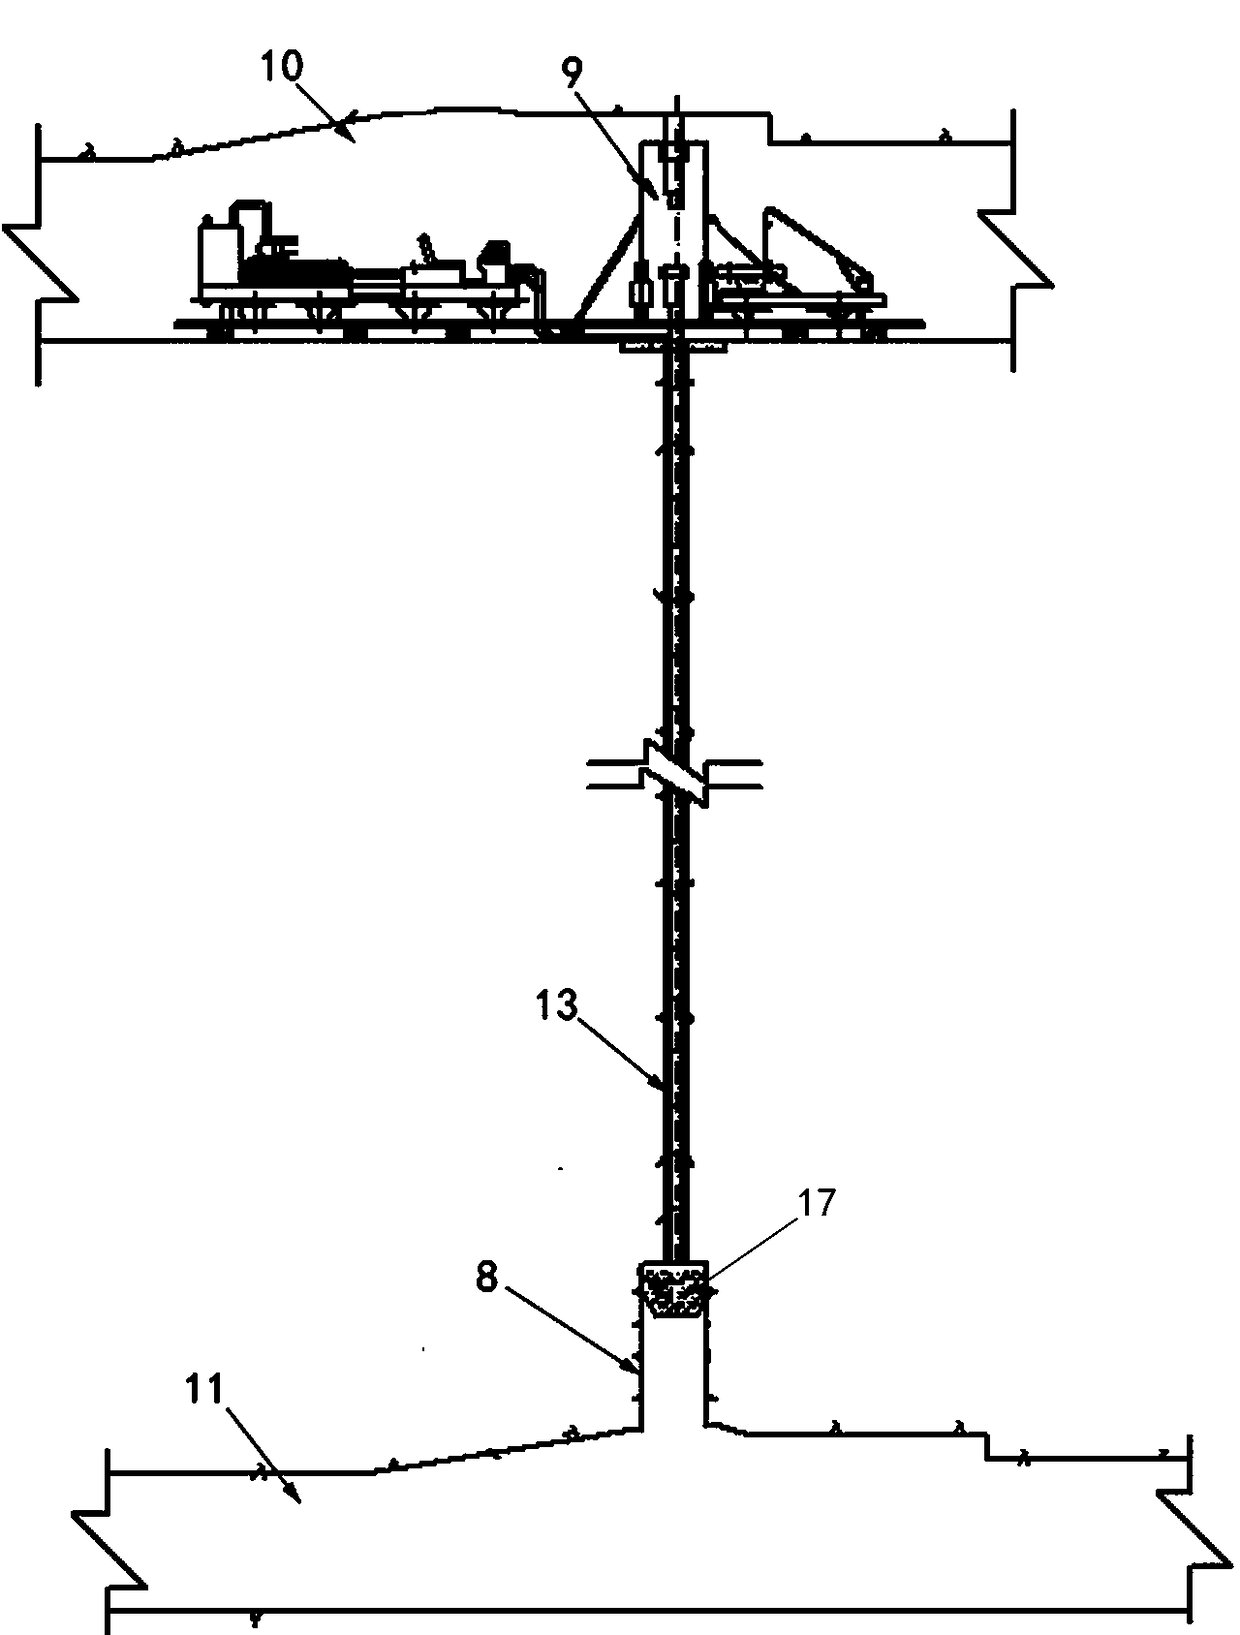 Construction method for utilizing raise-boring machine to mount vertical shaft gas pipe